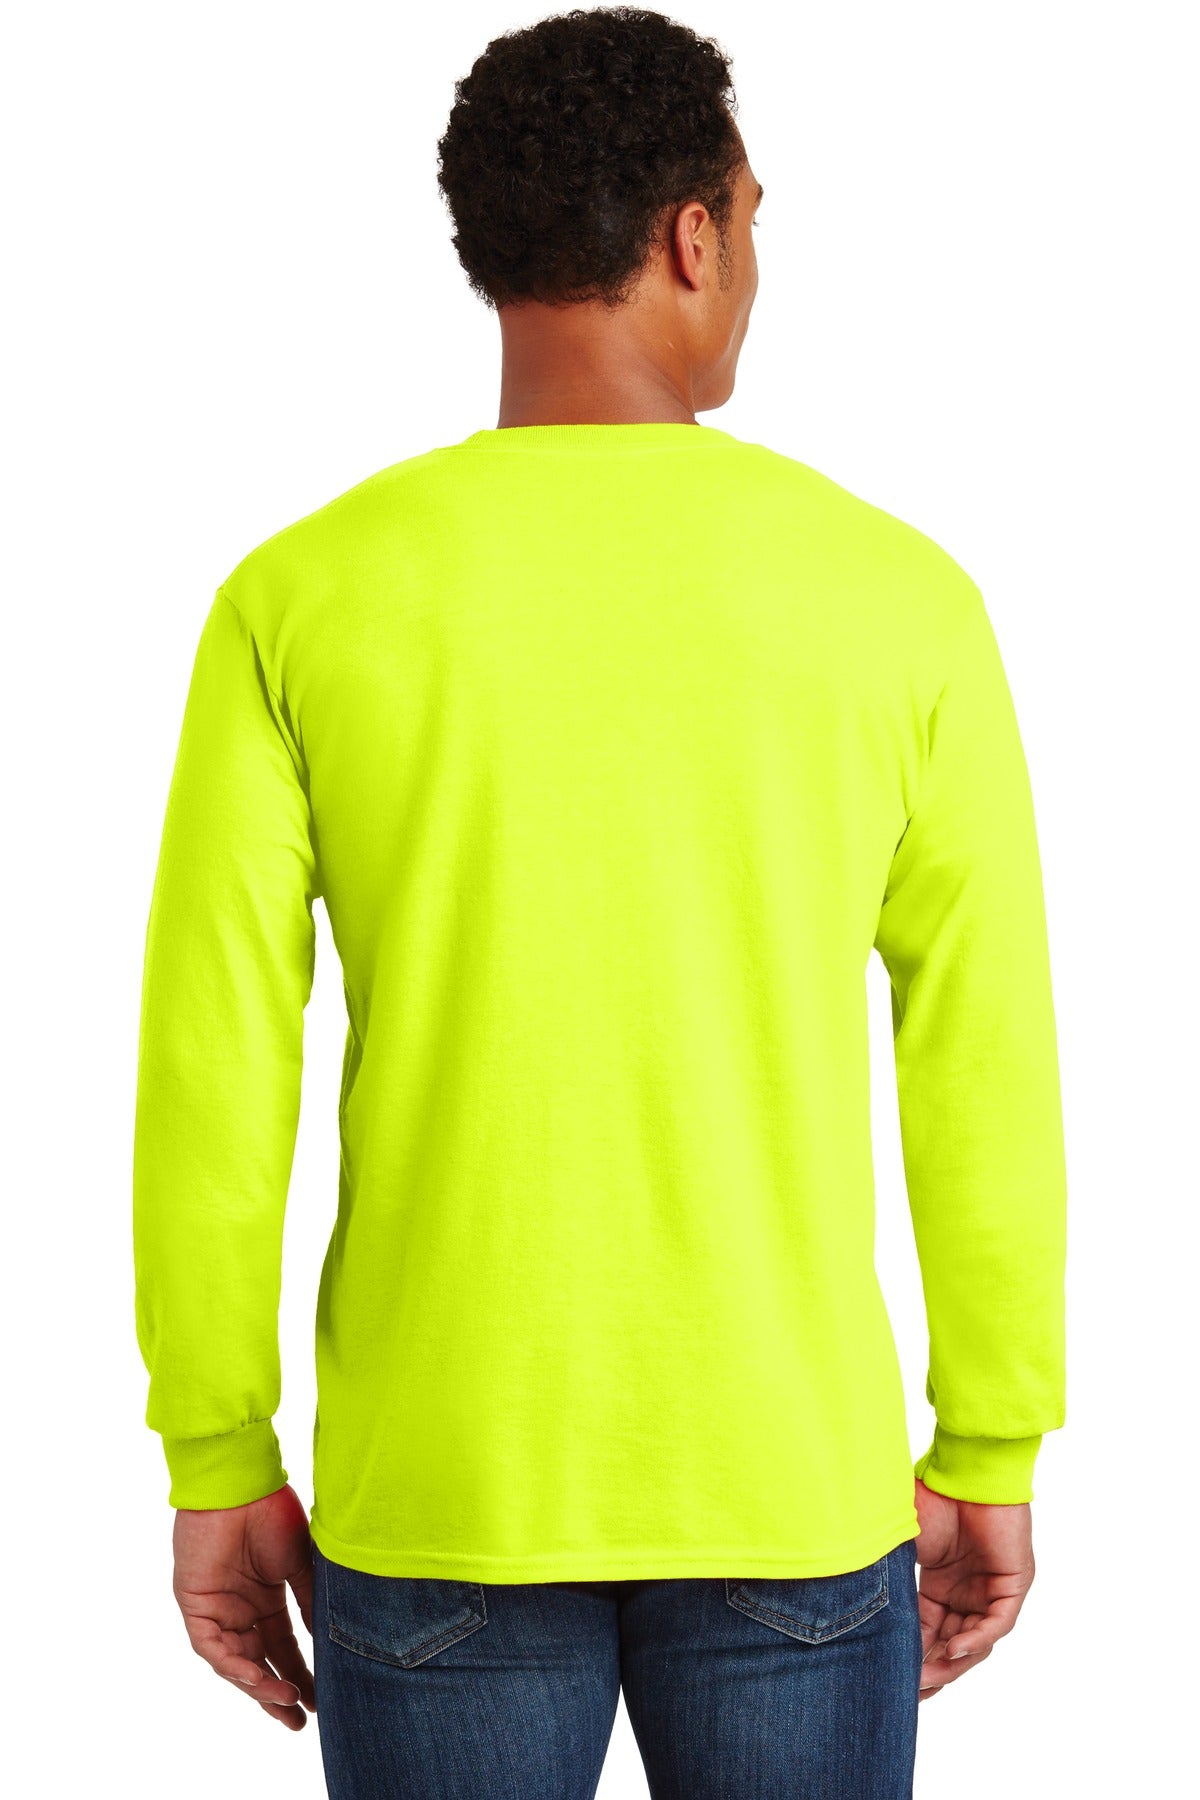 Gildan - Ultra Cotton 100% US Cotton Long Sleeve T-Shirt with Pocket. 2410